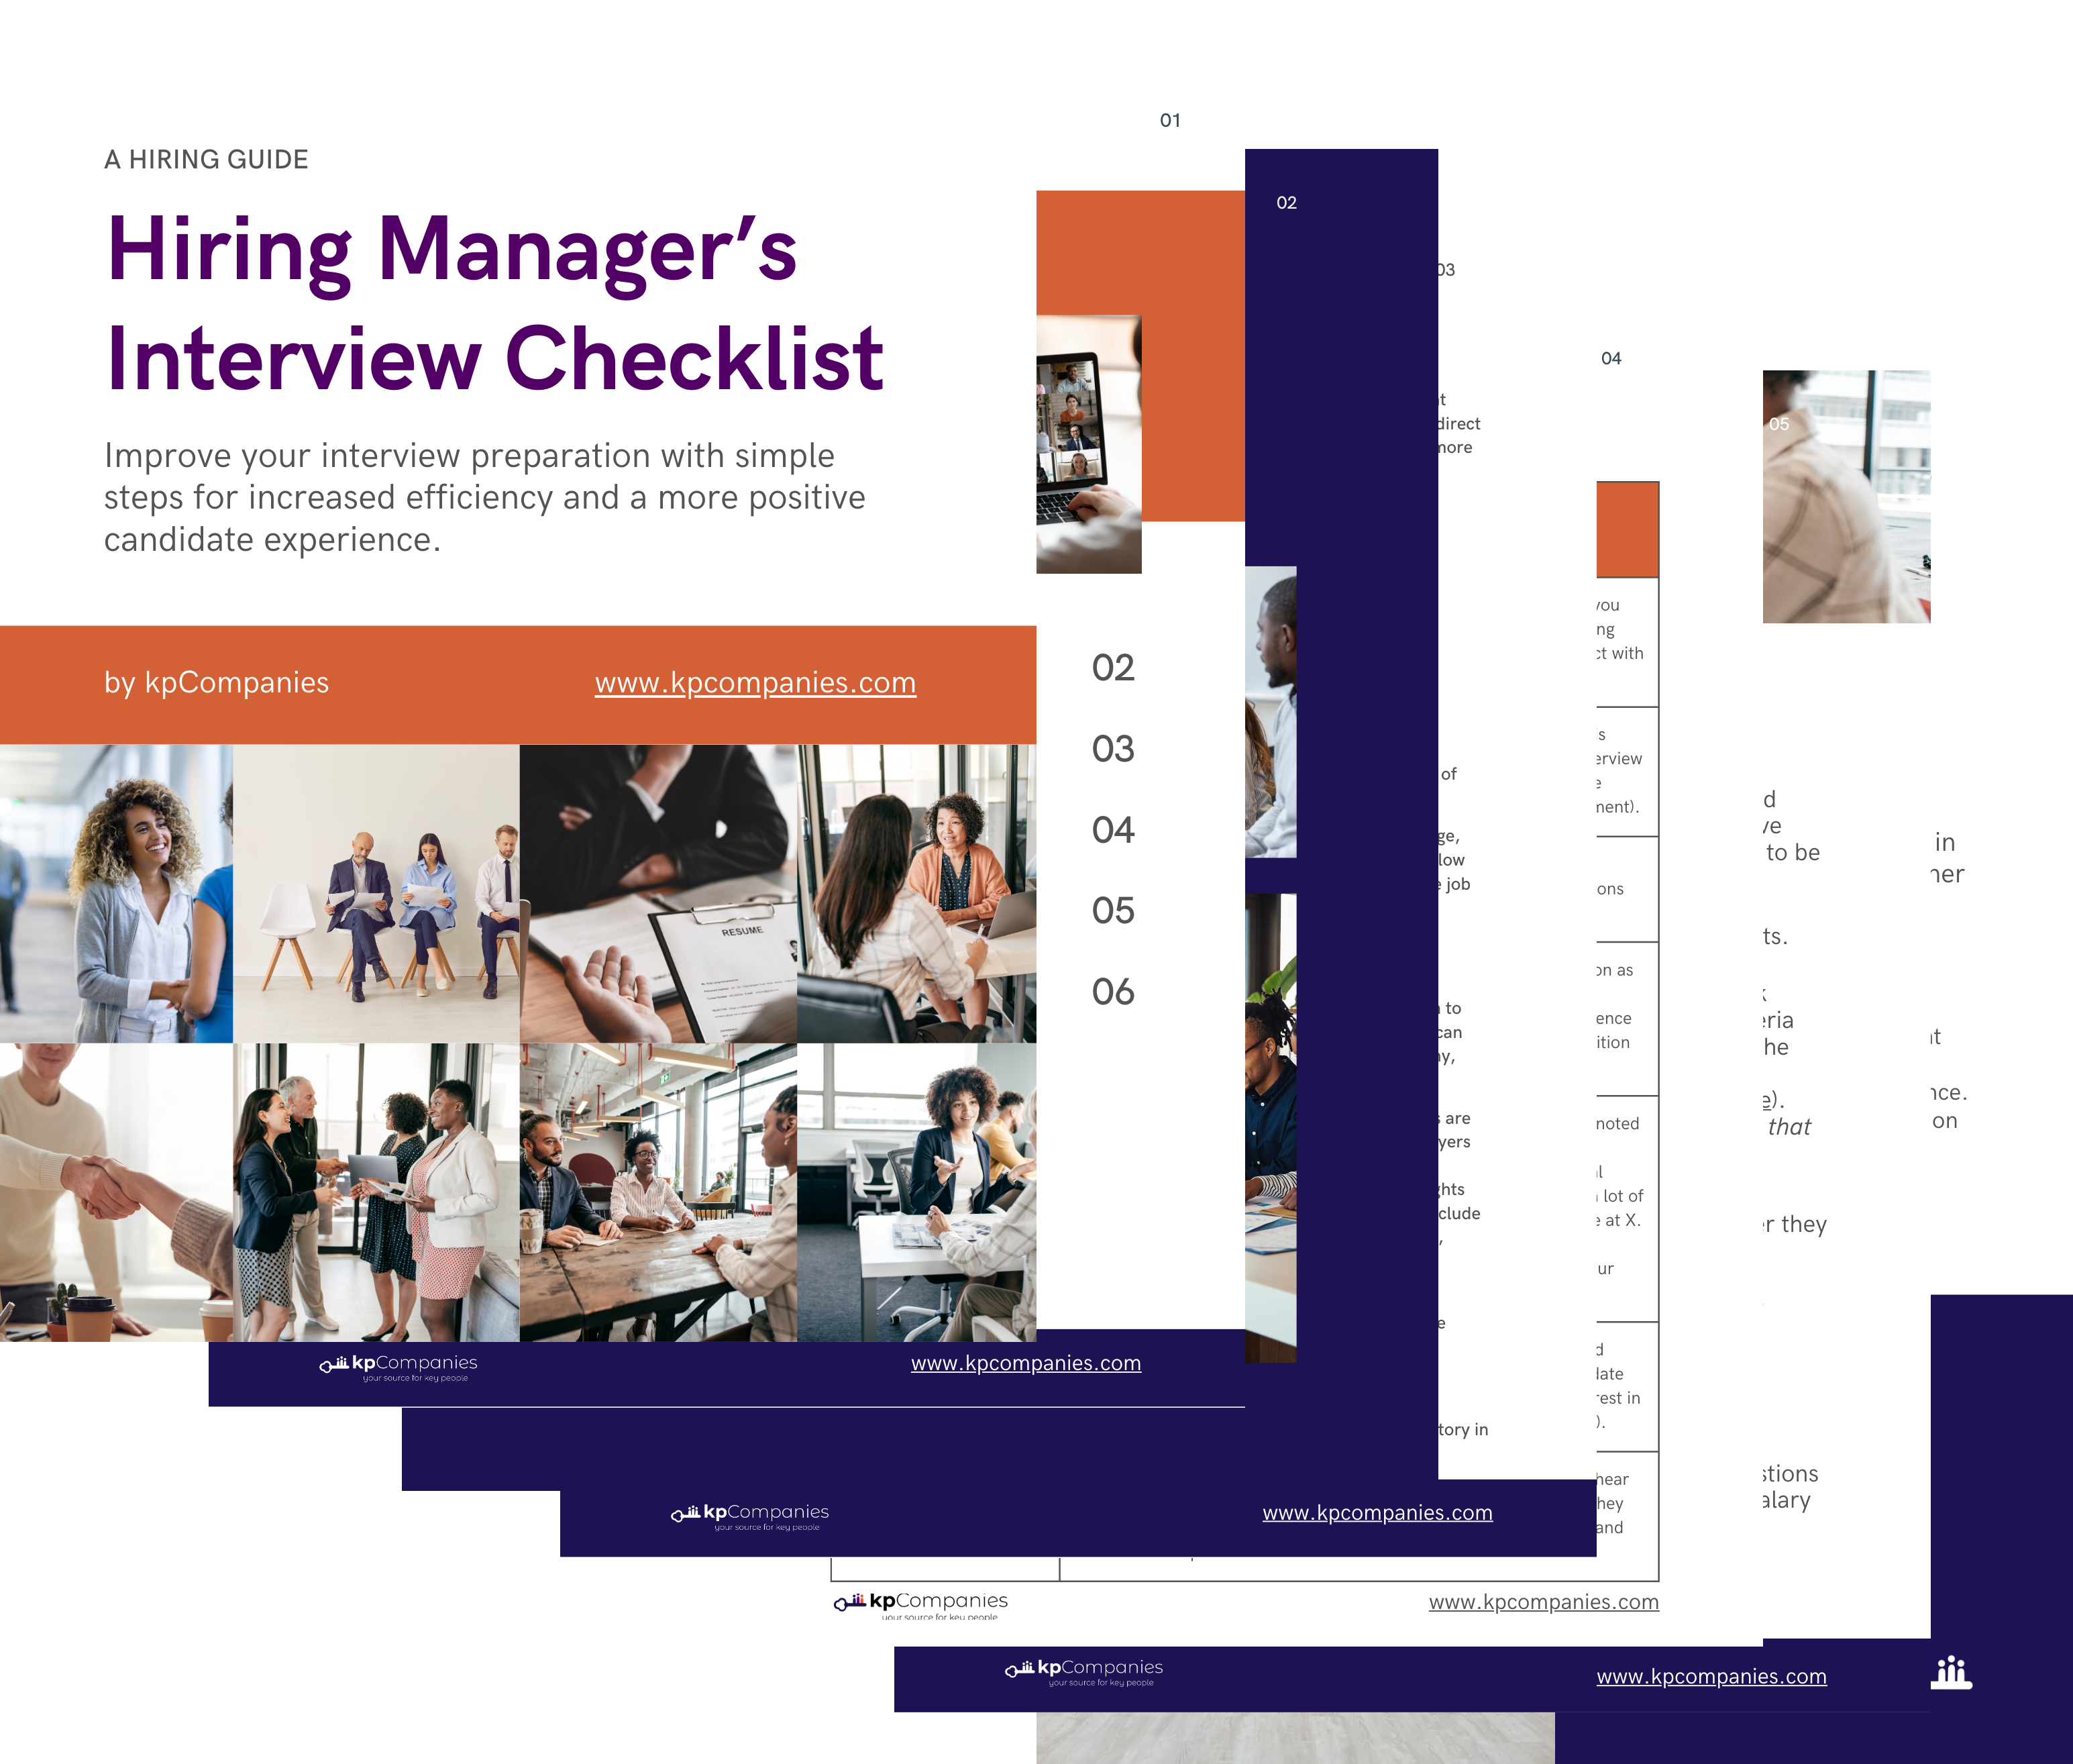 hiring manager checklist image 1